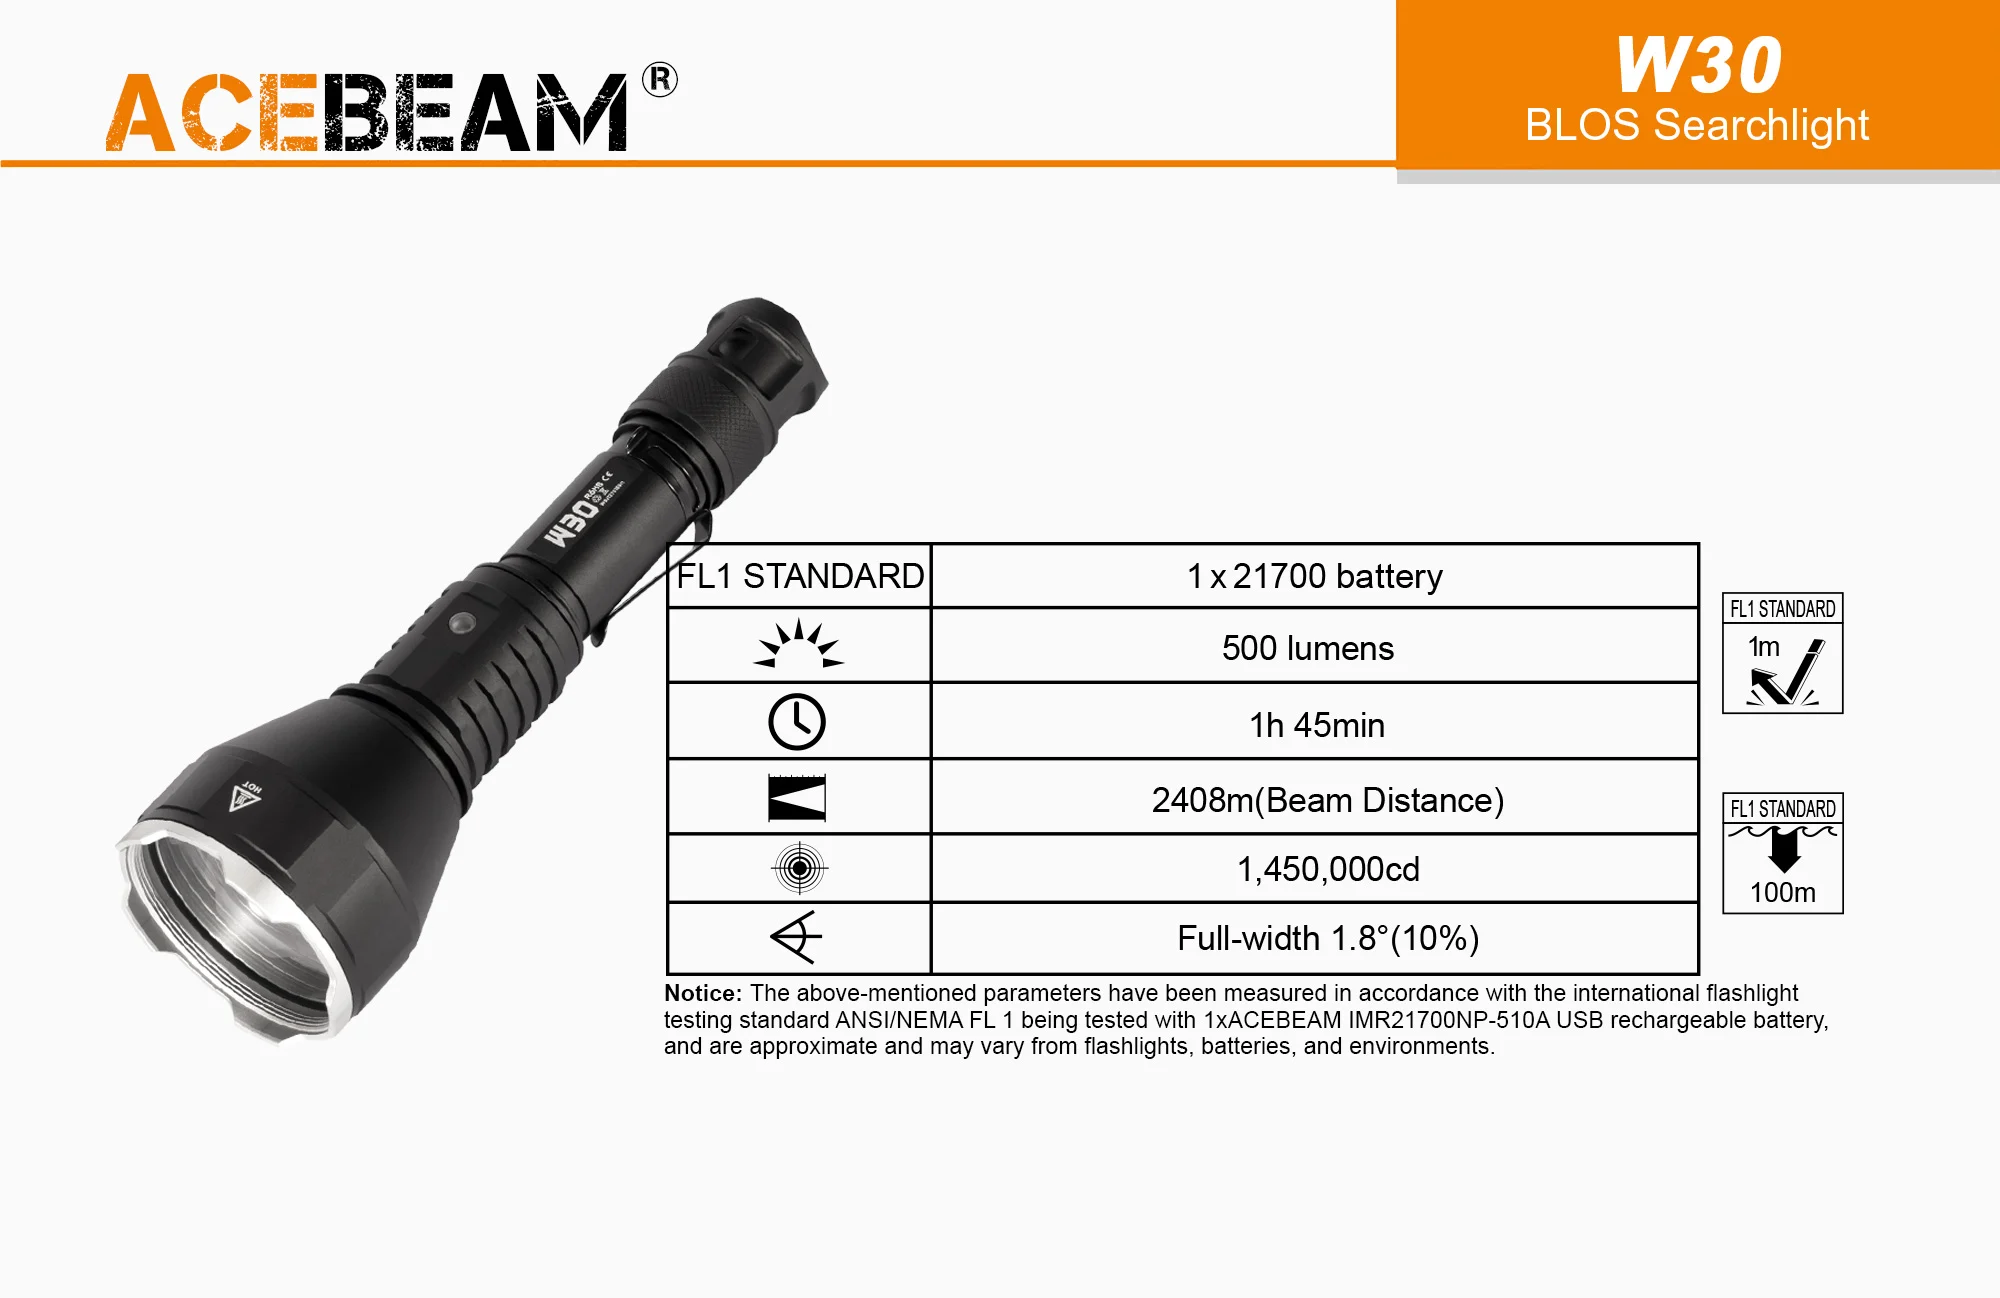 Acebeam W30 500 Lumens Long Range LEP White Laser Flashlight